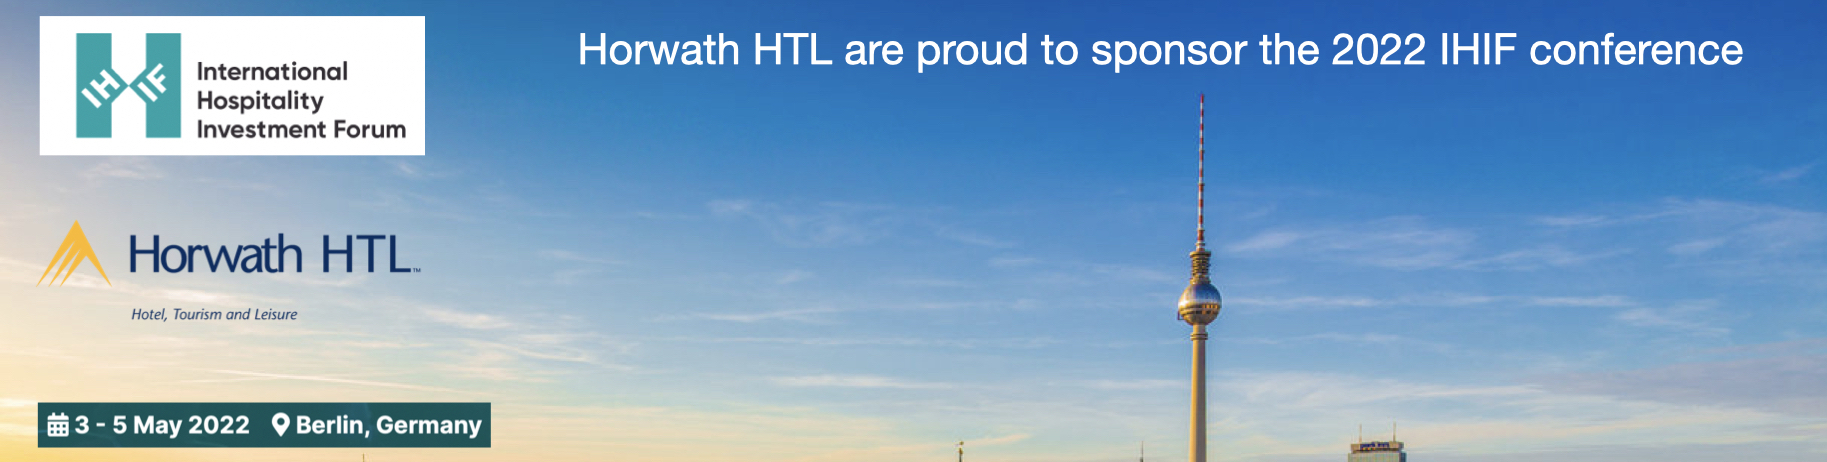 Horwath HTL sponsor the 2022 International Hotel Investment Forum